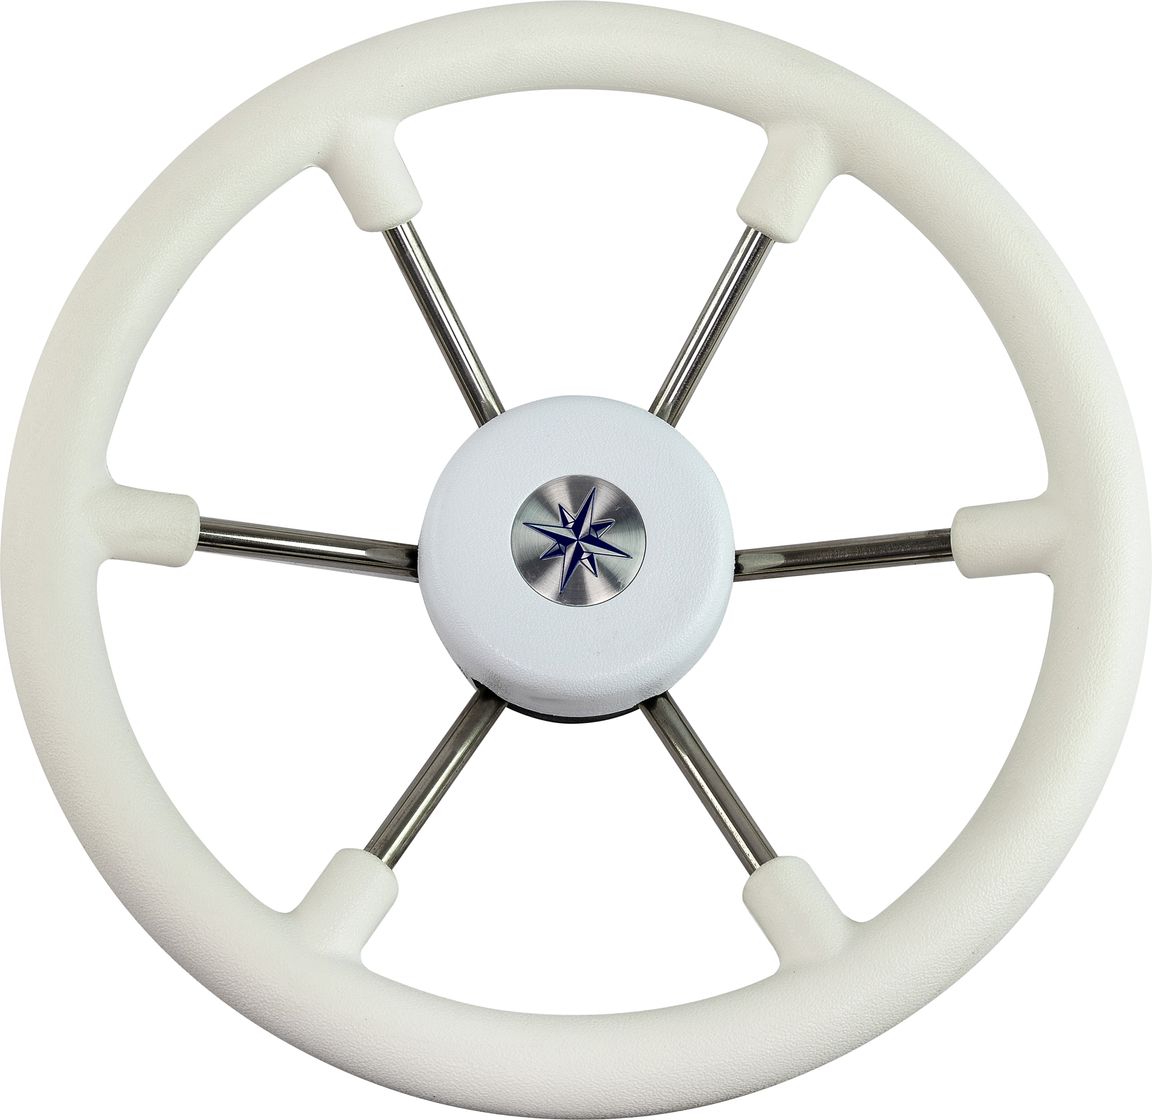 Рулевое колесо LEADER TANEGUM белый обод серебряные спицы д. 330 мм VN7330-08